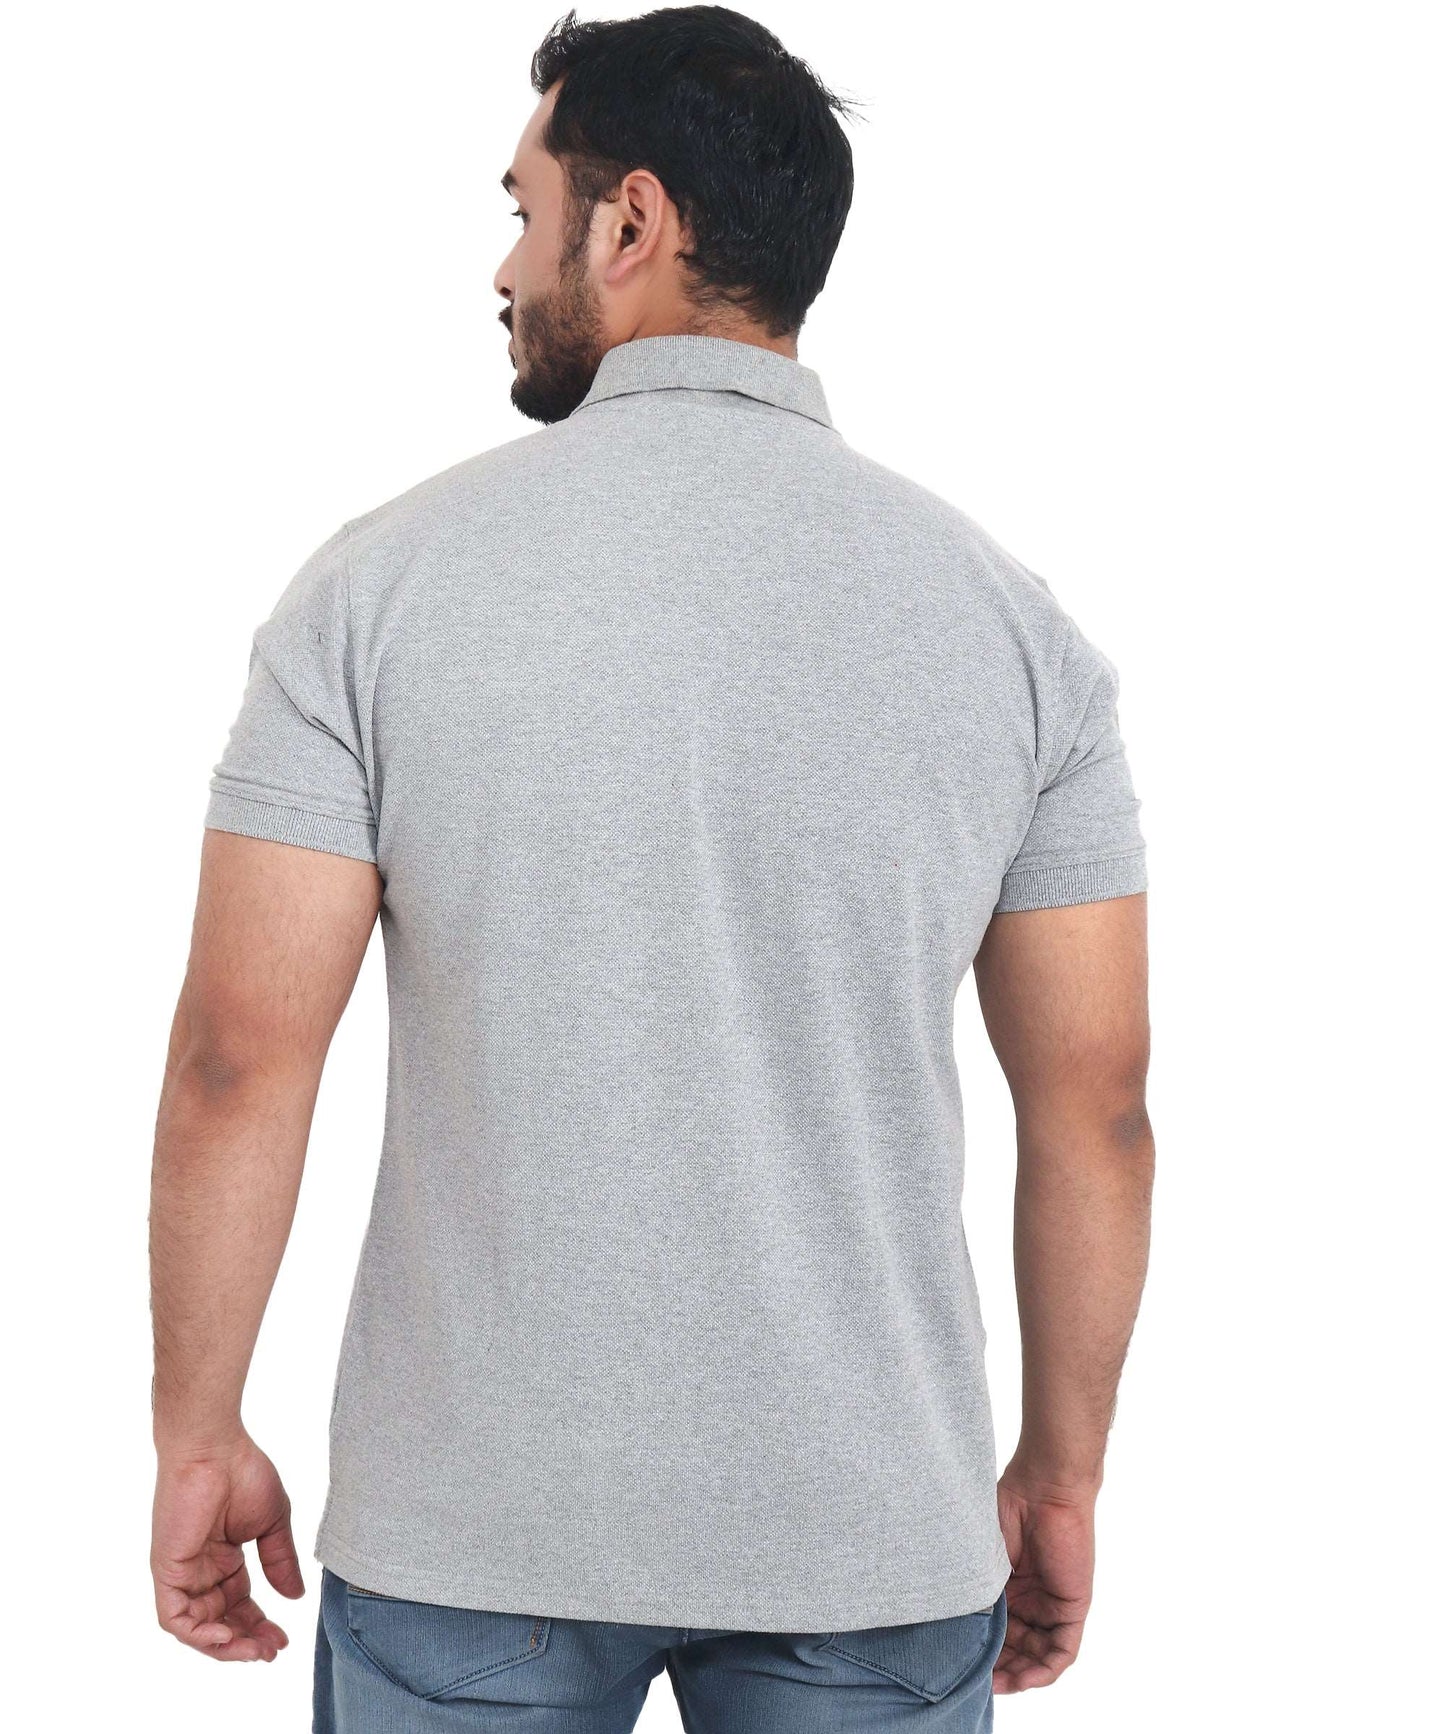  Polycotton Premium Polo T shirt for Men